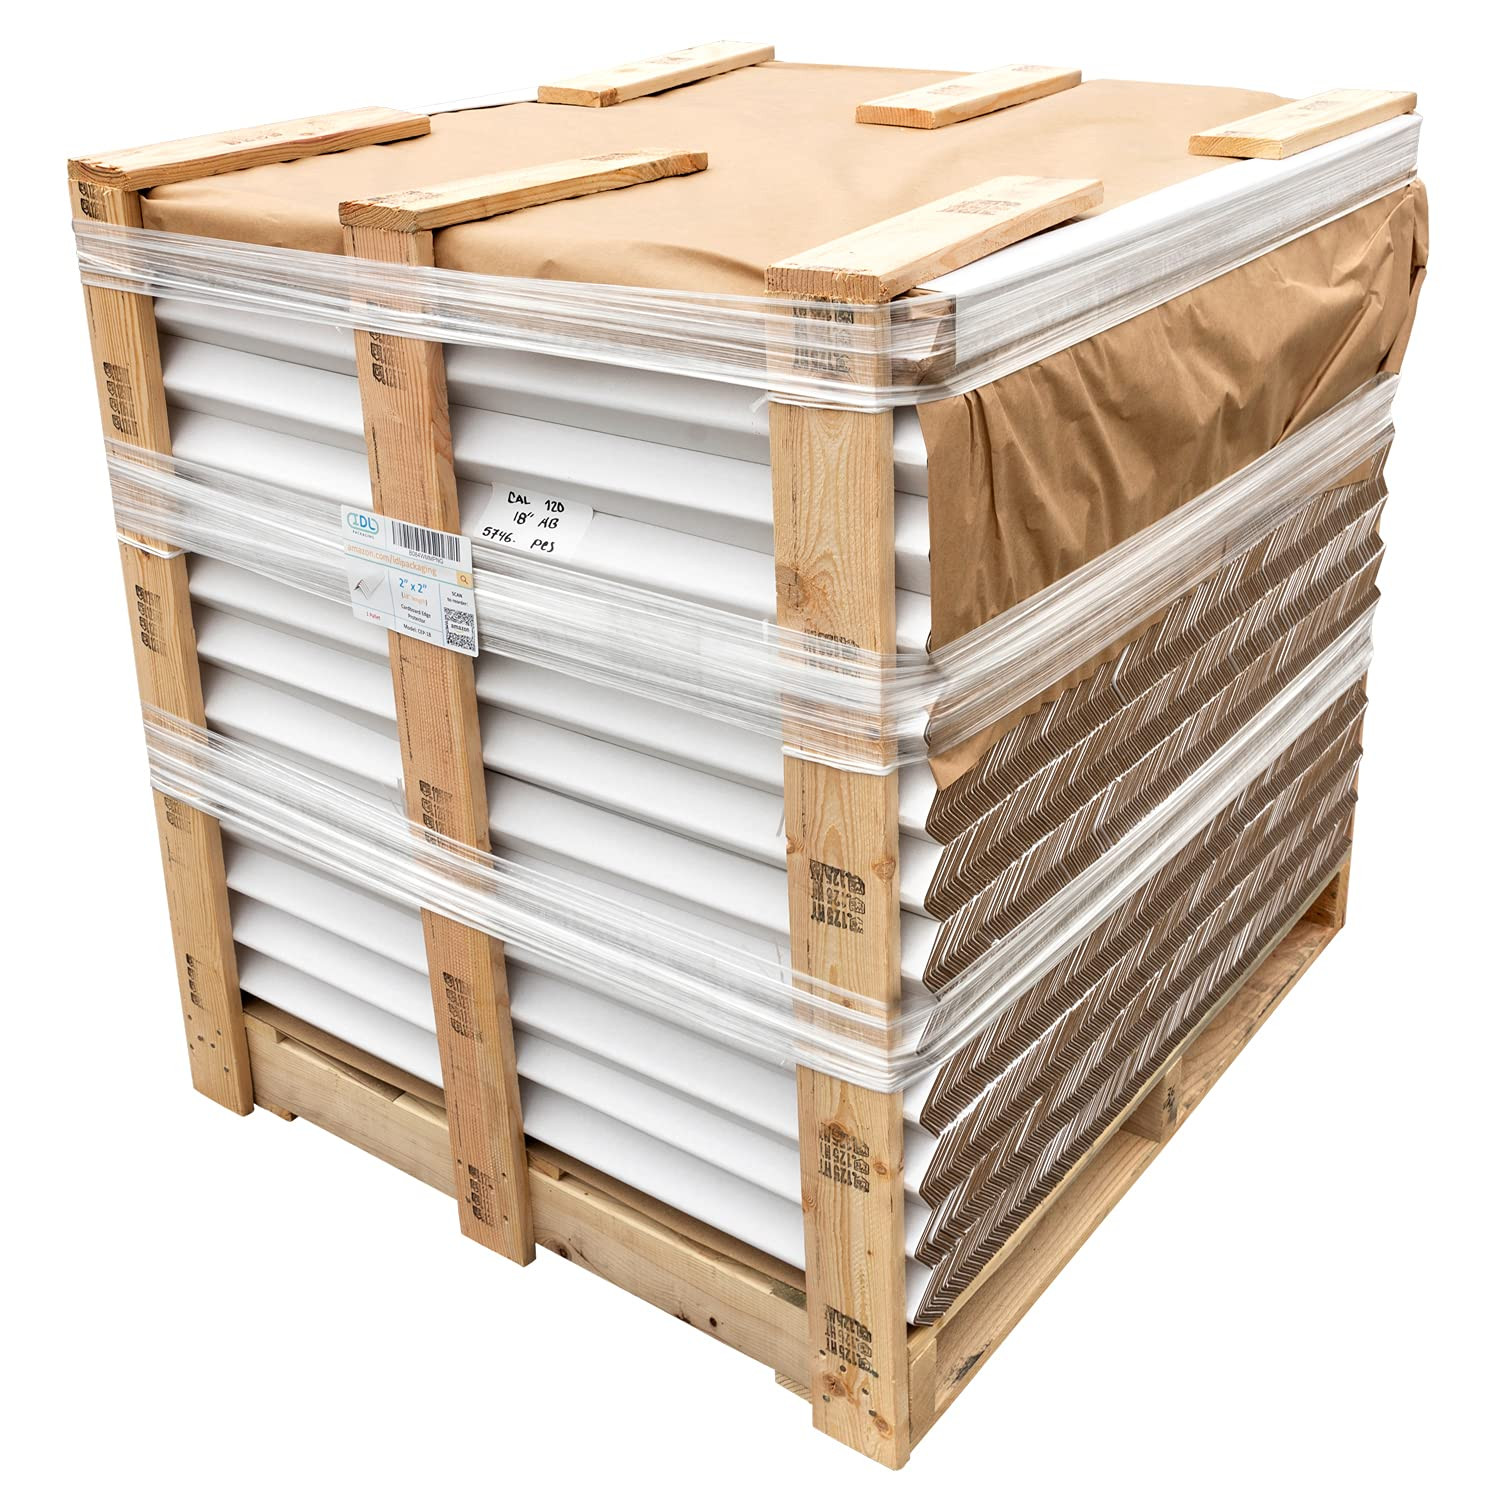 Cardboard Edge Protector 2 x 2 x 24, Pack of 100 V-Board Reinforced Cardboard Corners for Shipping White Kraft Corner Protectors